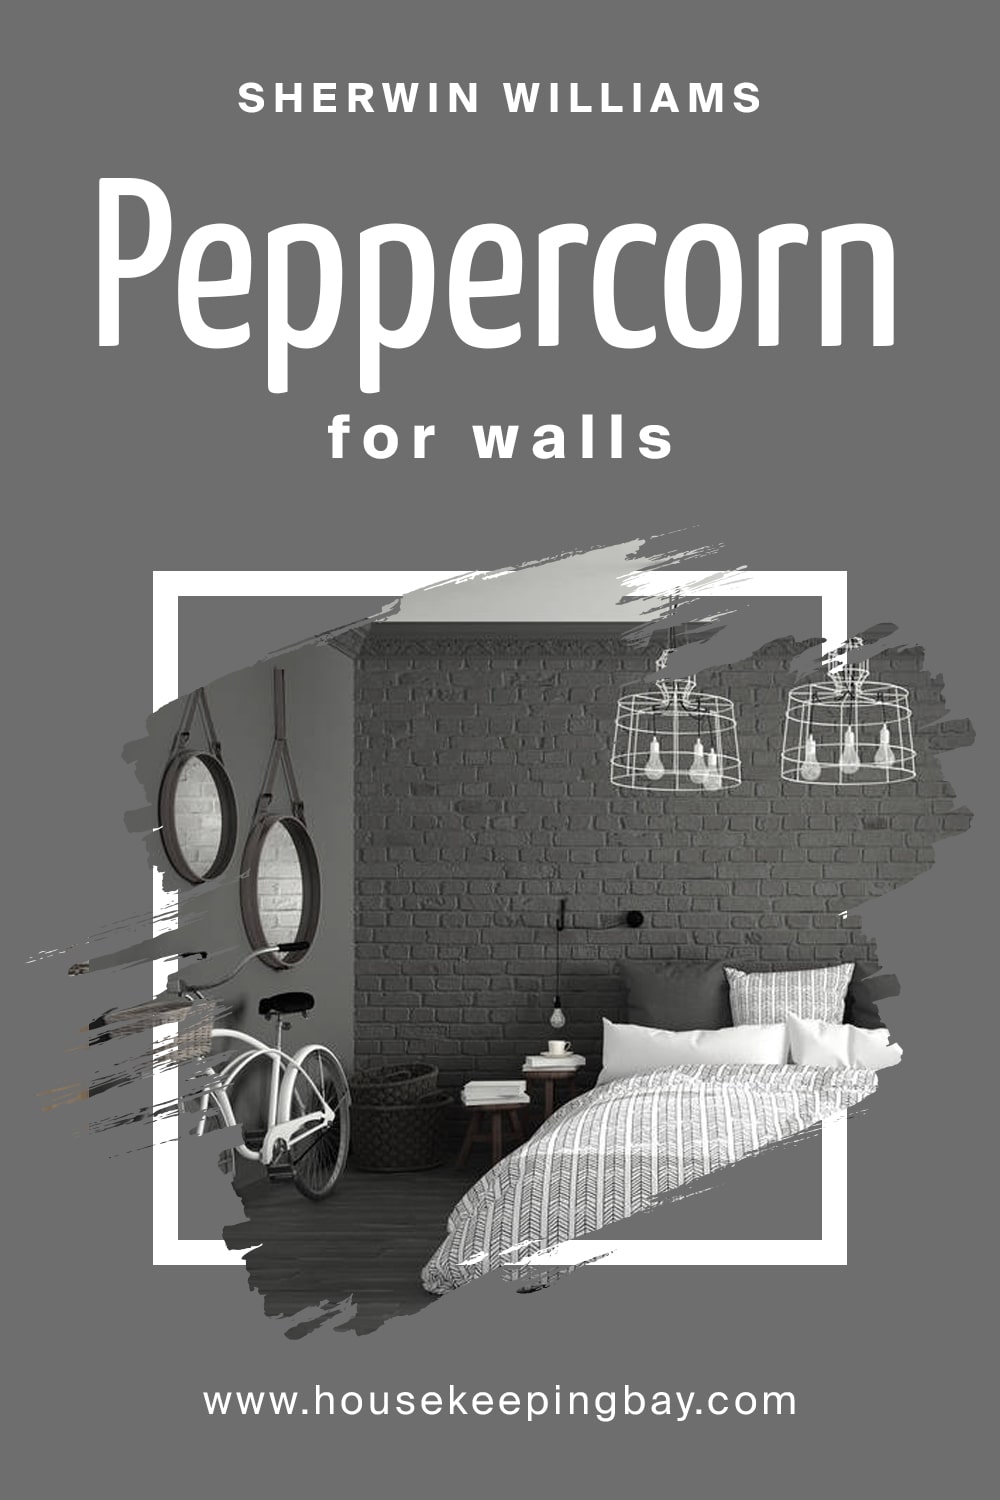 Peppercorn for walls